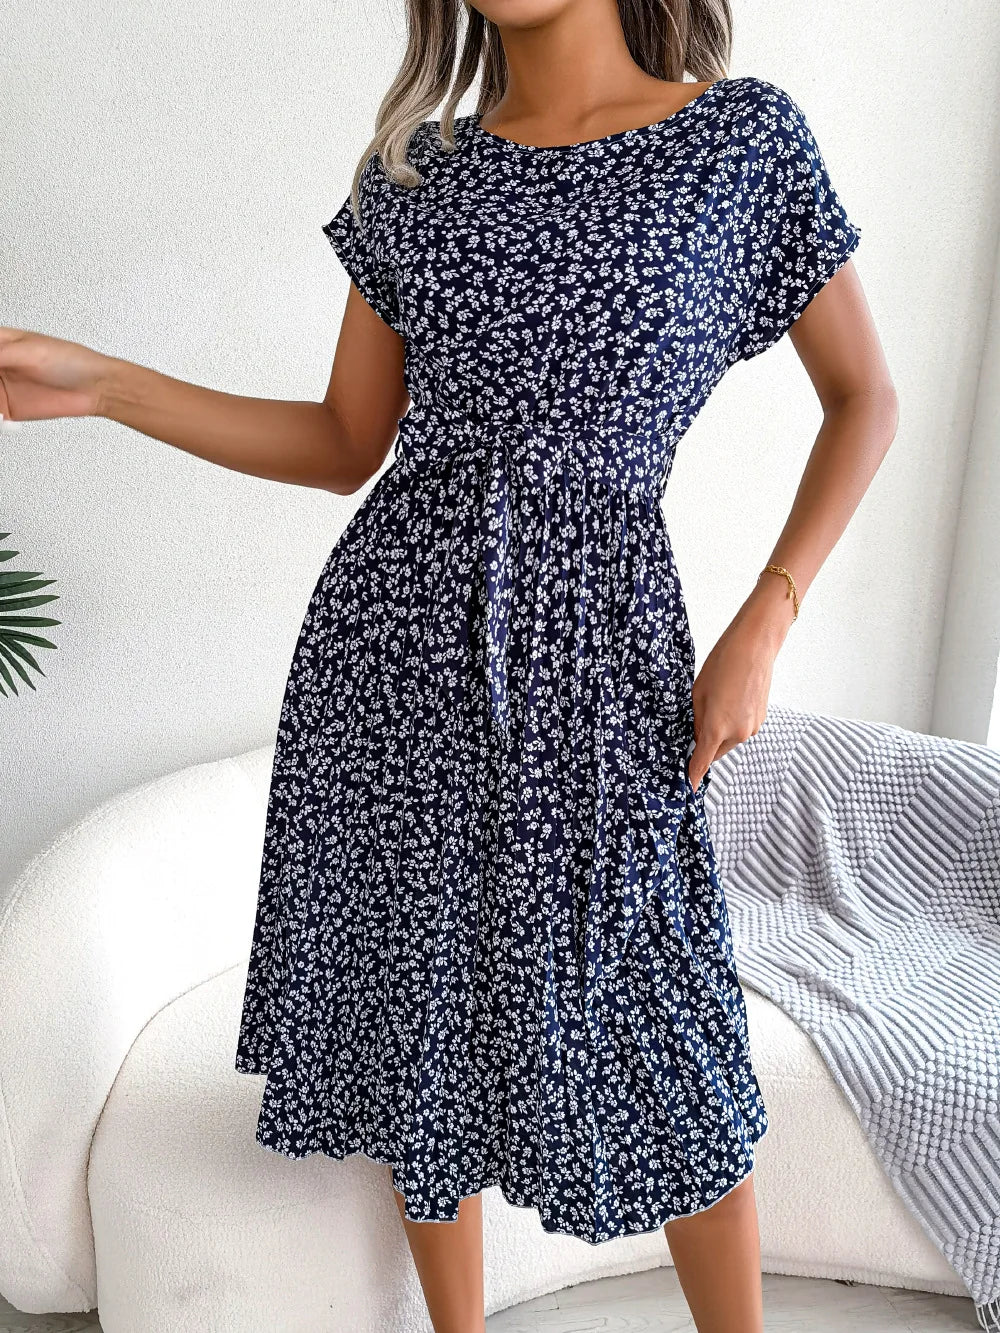 Deep Blue Spring/Summer Floral Pleated A-Line Dress with Short Sleeves - Effortlessly Elegant